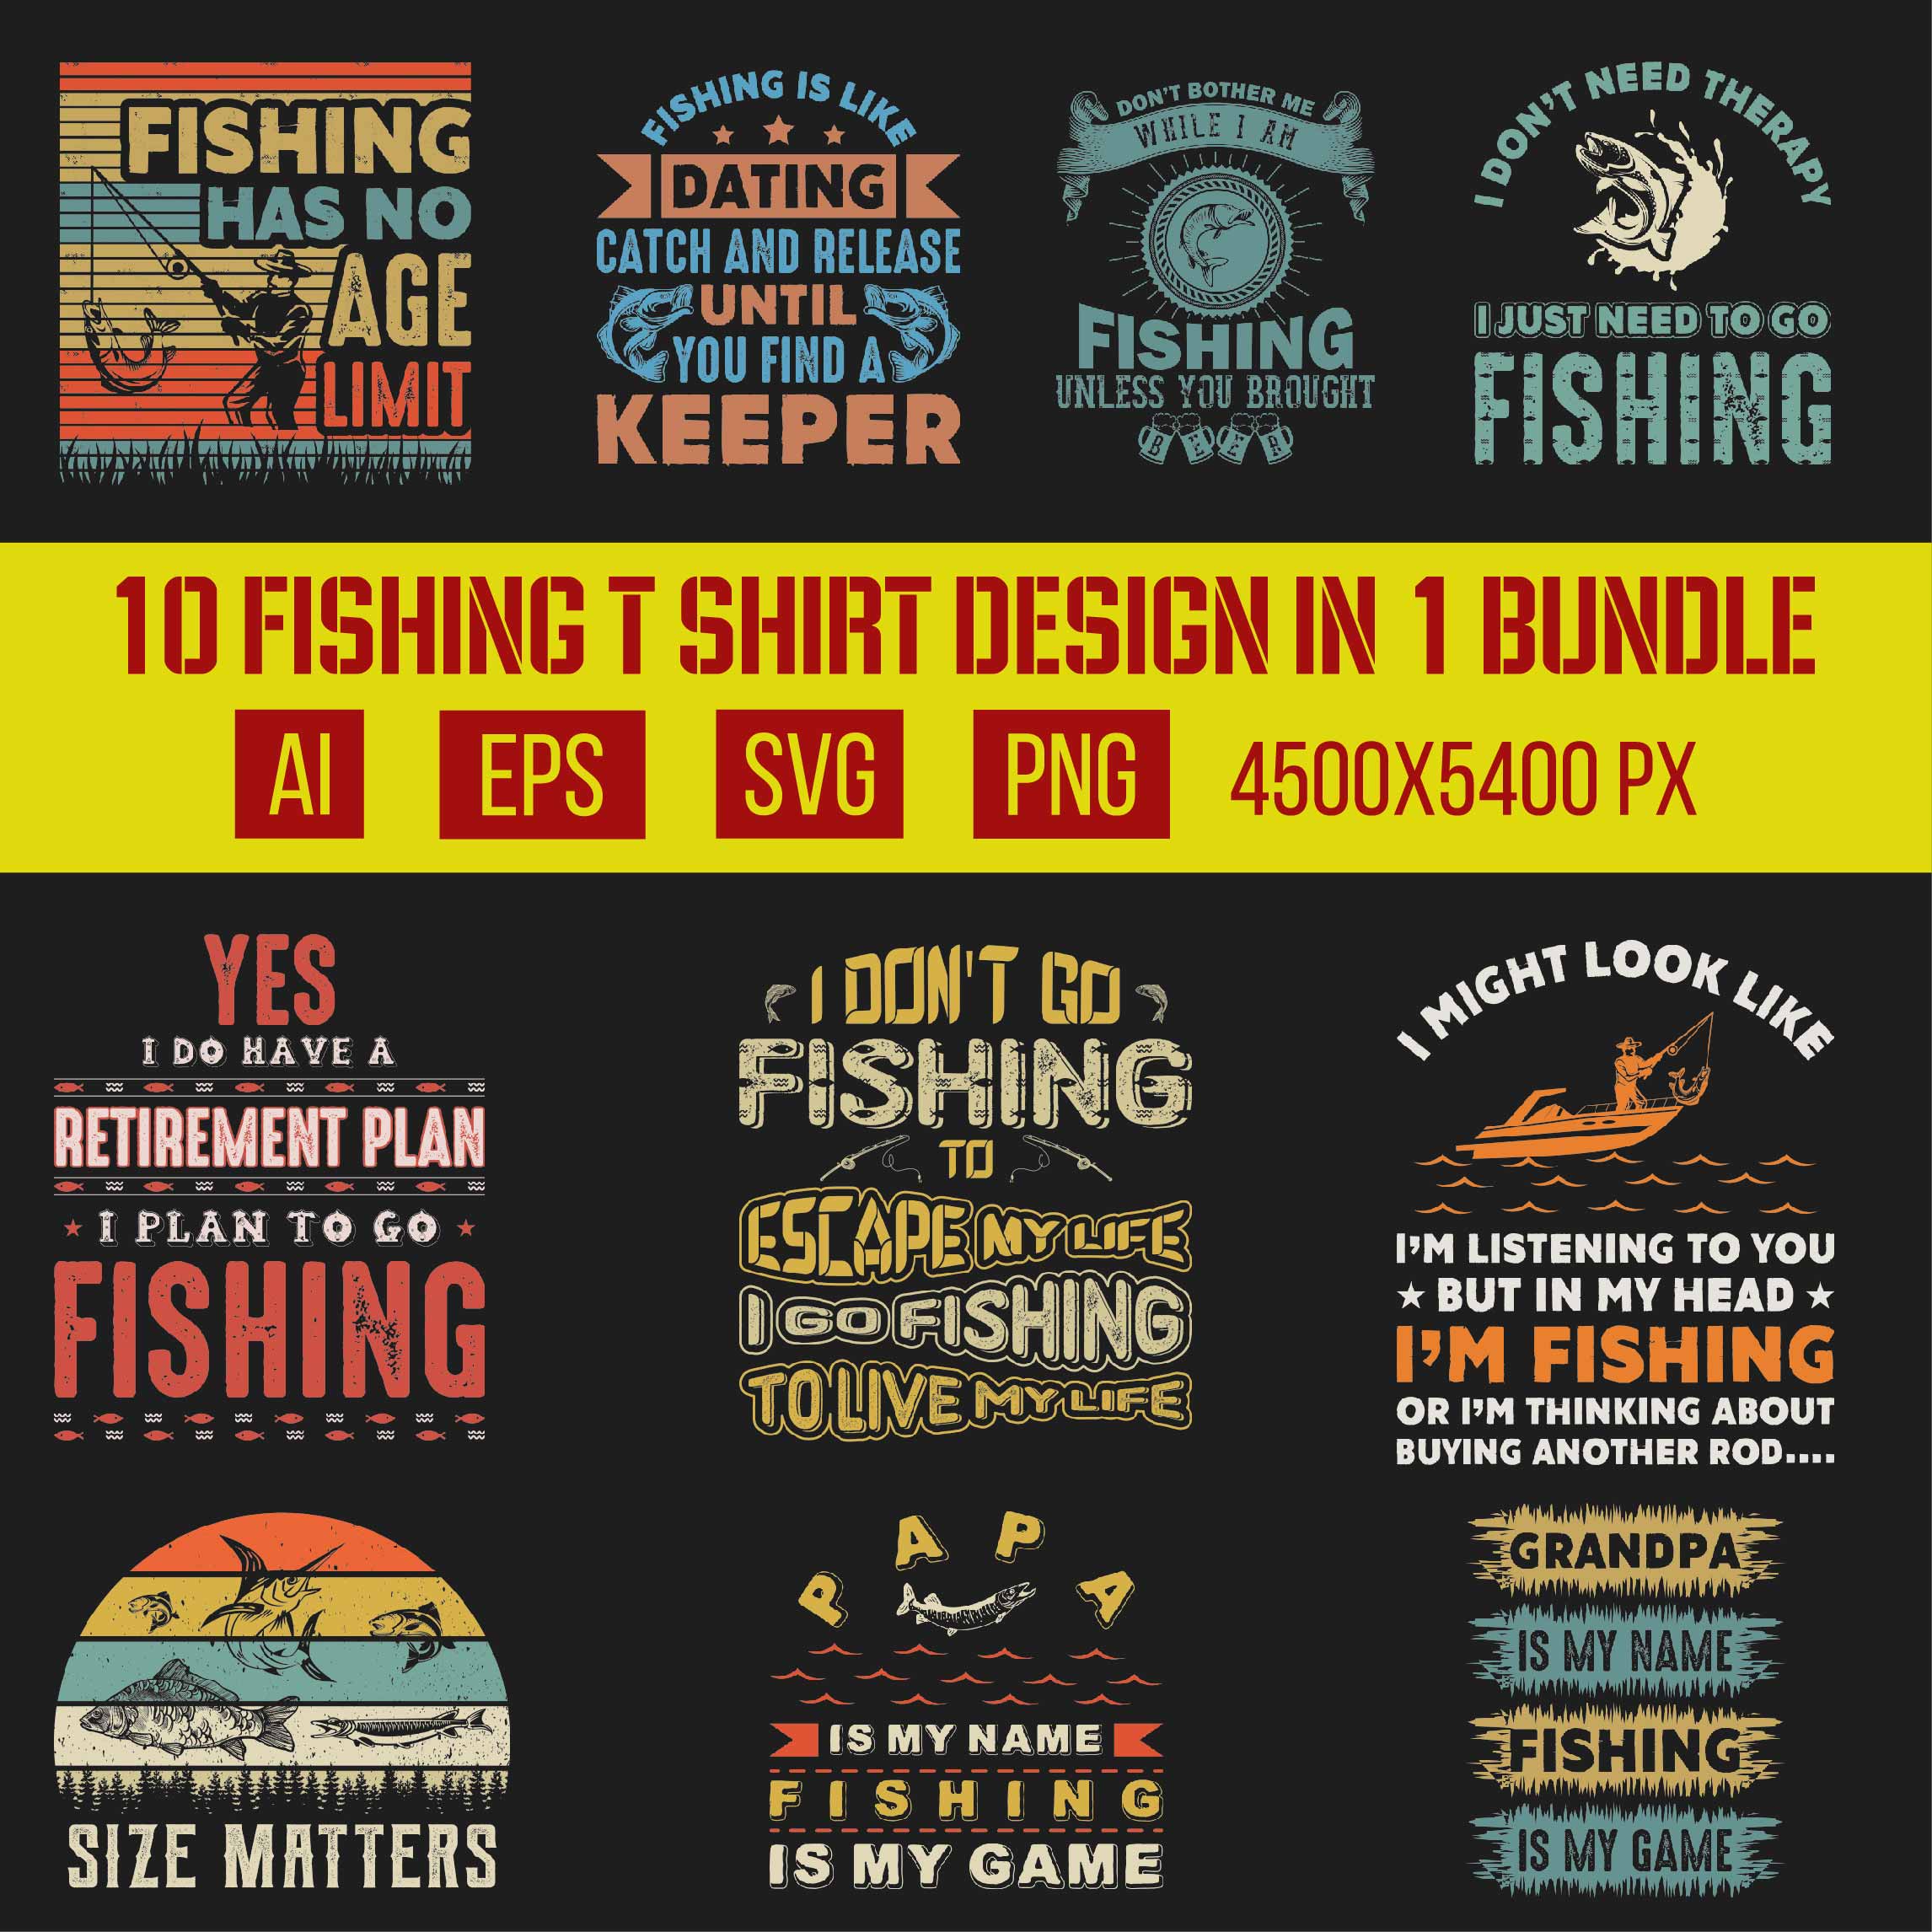 Fishing T shirt Designs Bundle cover image.